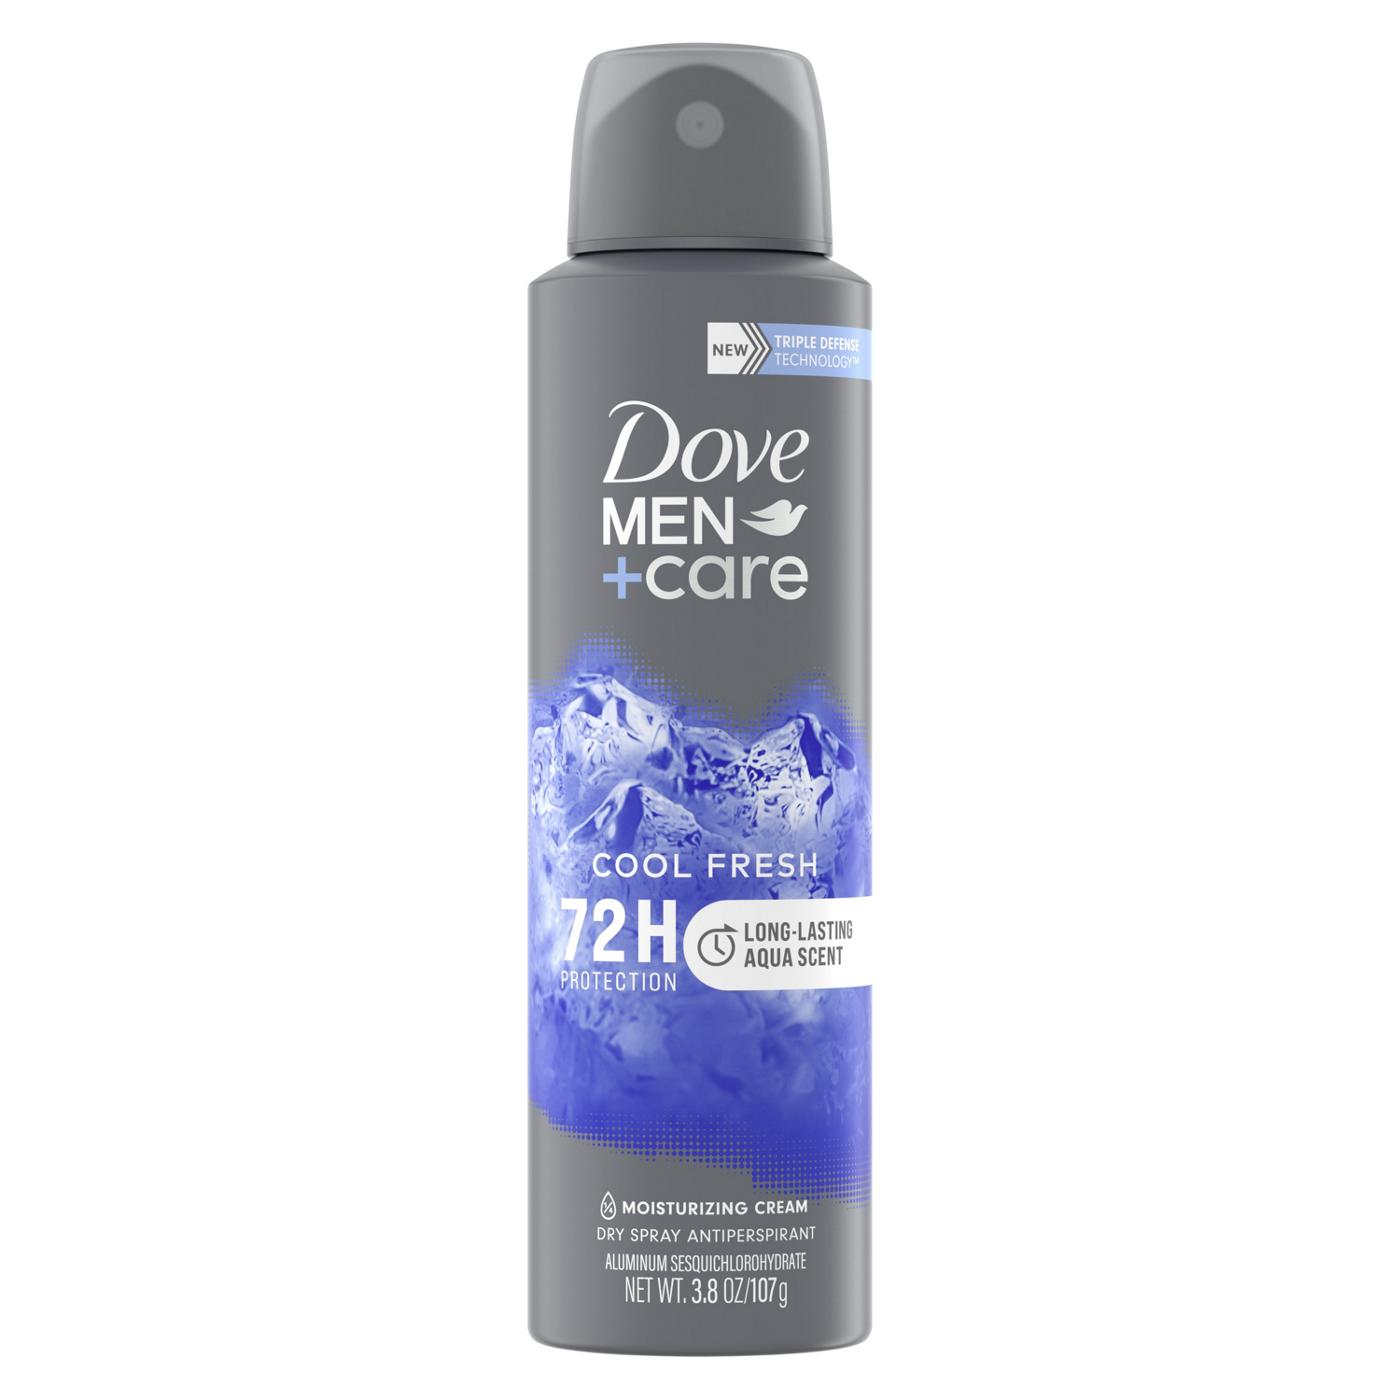 Dove Men+Care Antiperspirant Deodorant Dry Spray For Men Cool Fresh; image 1 of 7